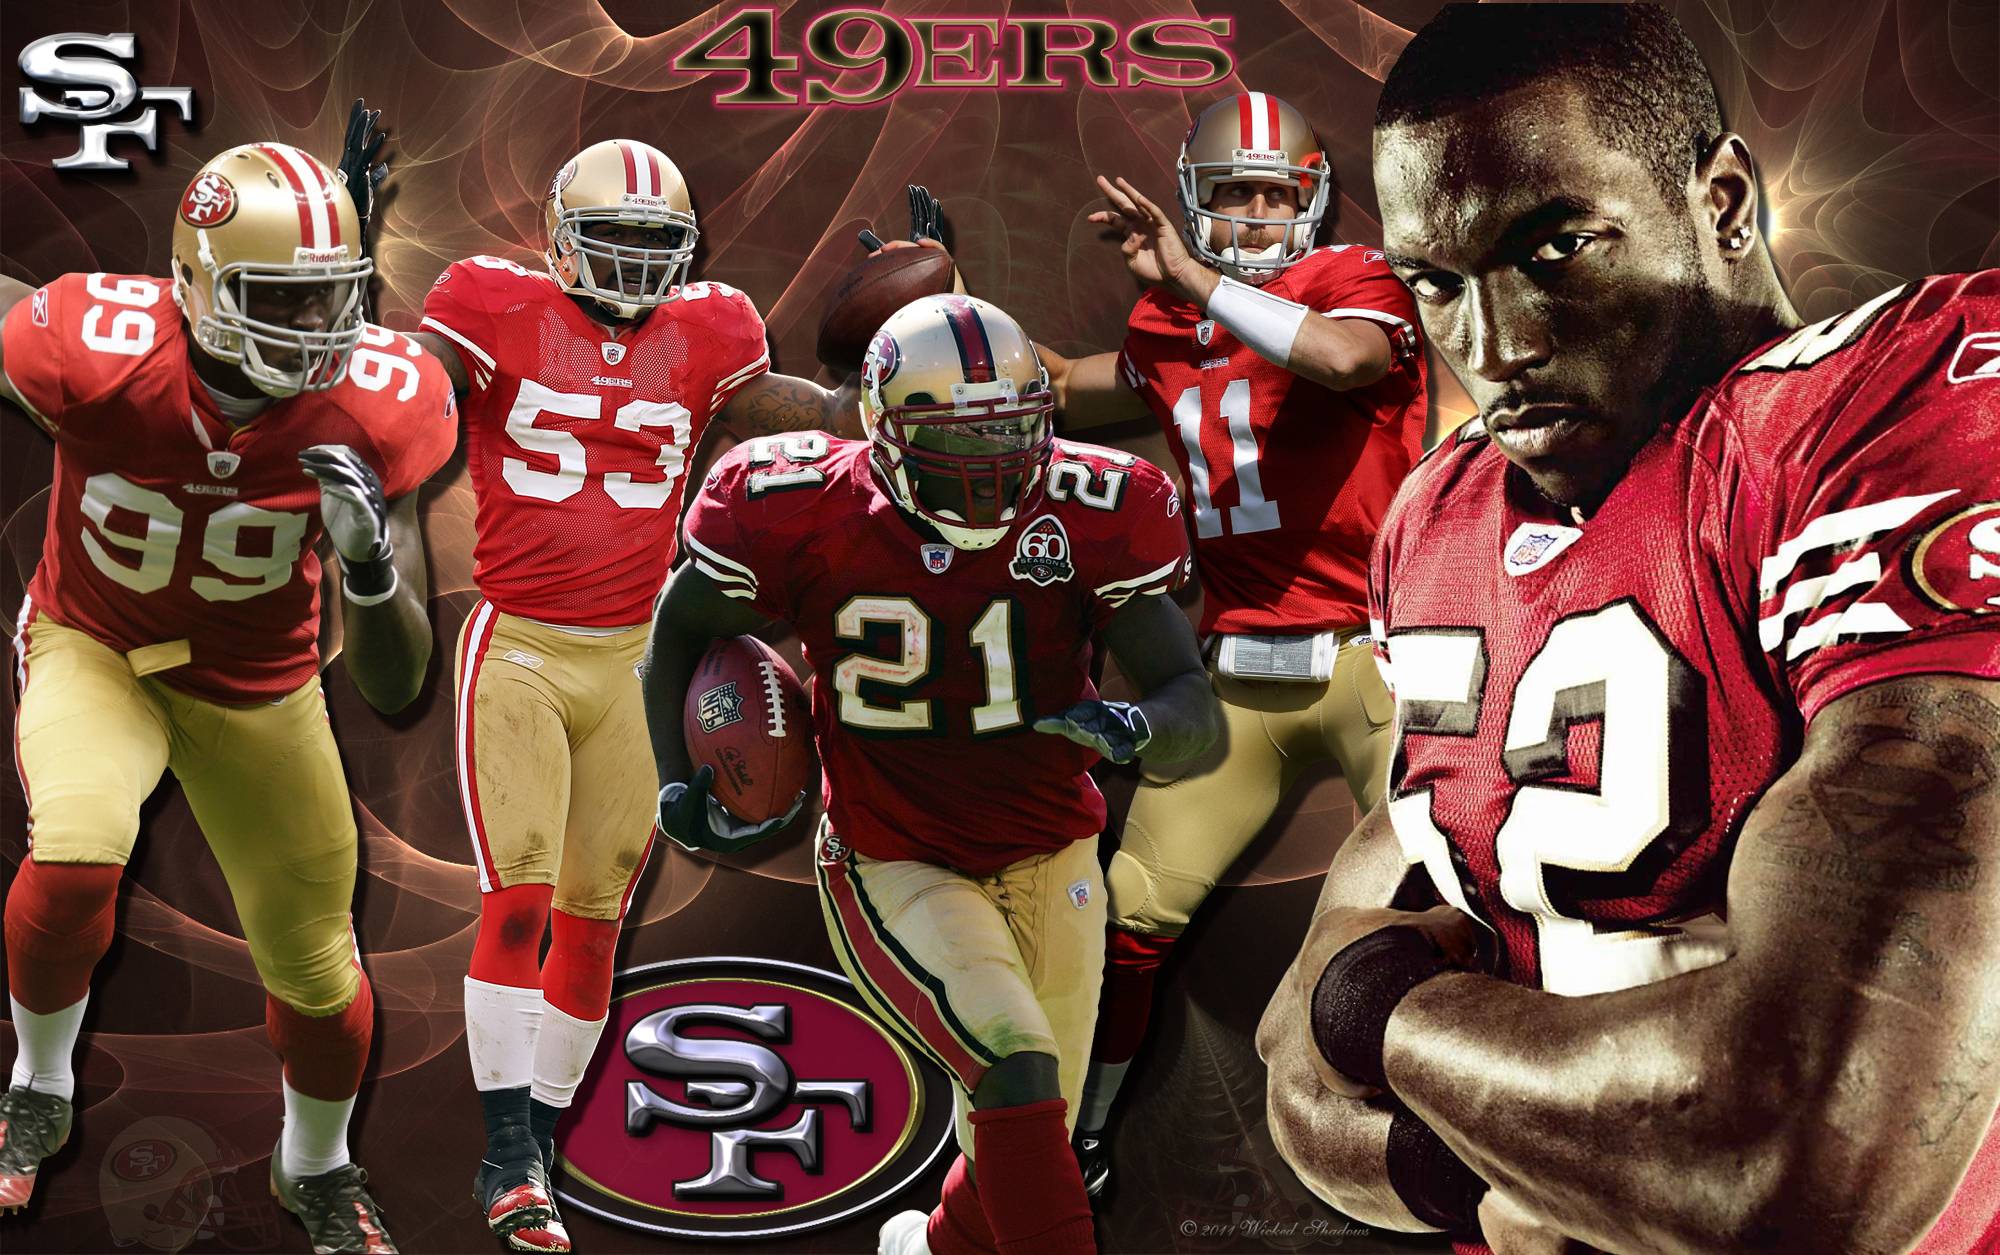 San Francisco 49ers Team Wallpaper